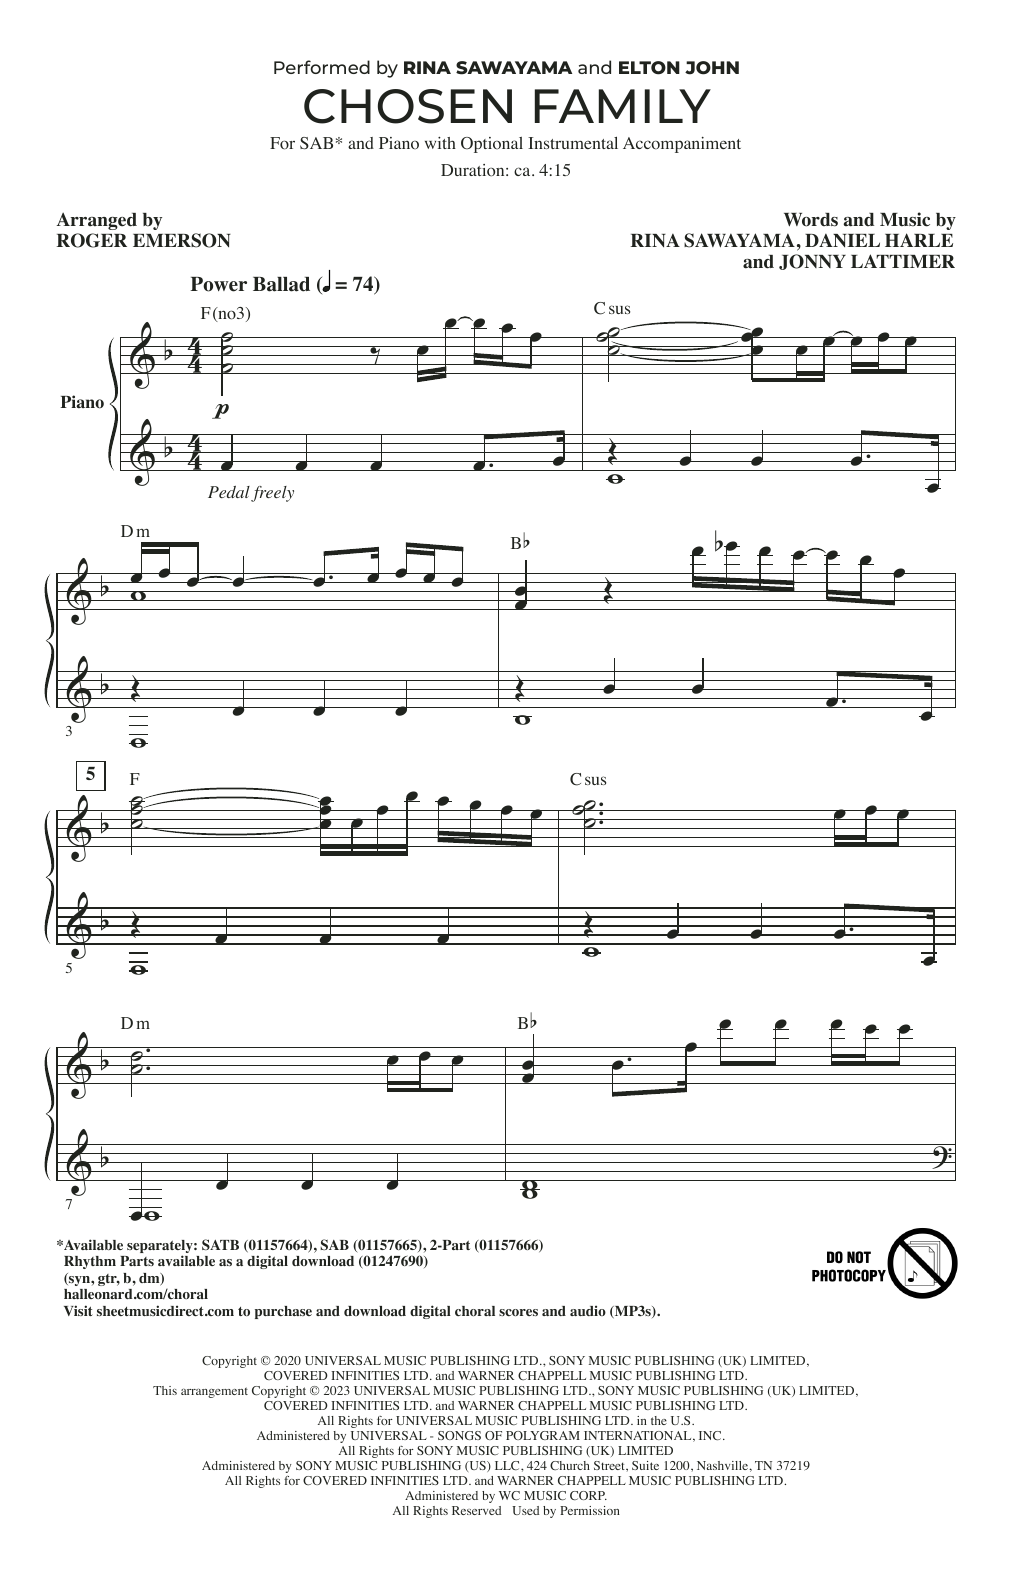 Rina Sawayama and Elton John Chosen Family (arr. Roger Emerson) Sheet Music Notes & Chords for SATB Choir - Download or Print PDF